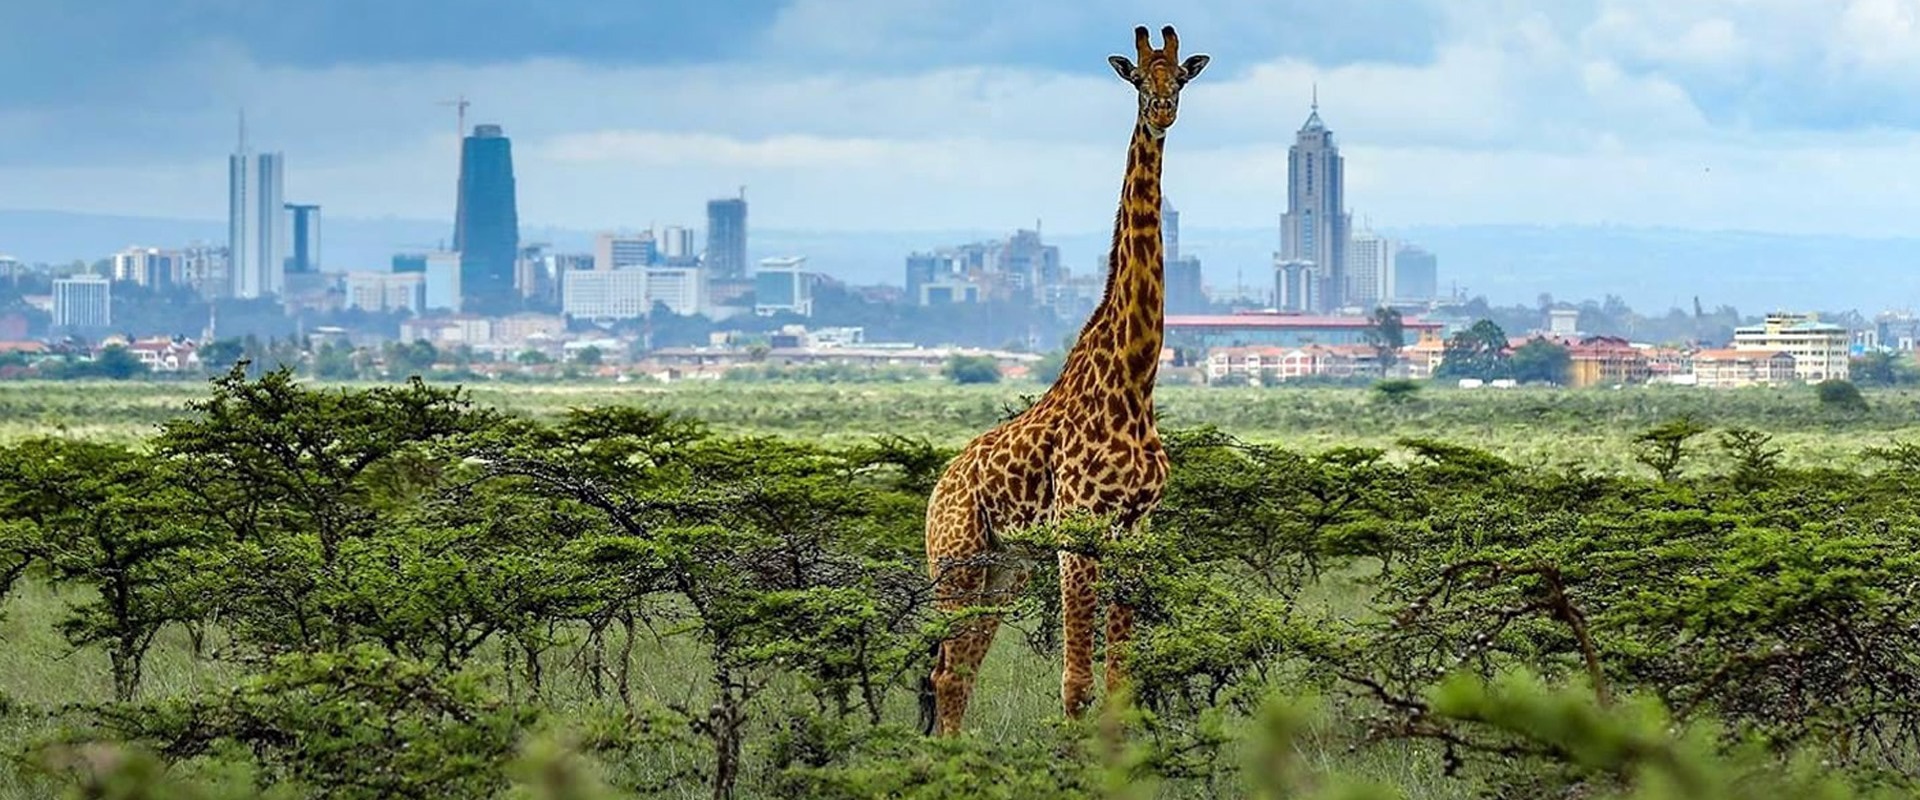 Visit the Nairobi National Park